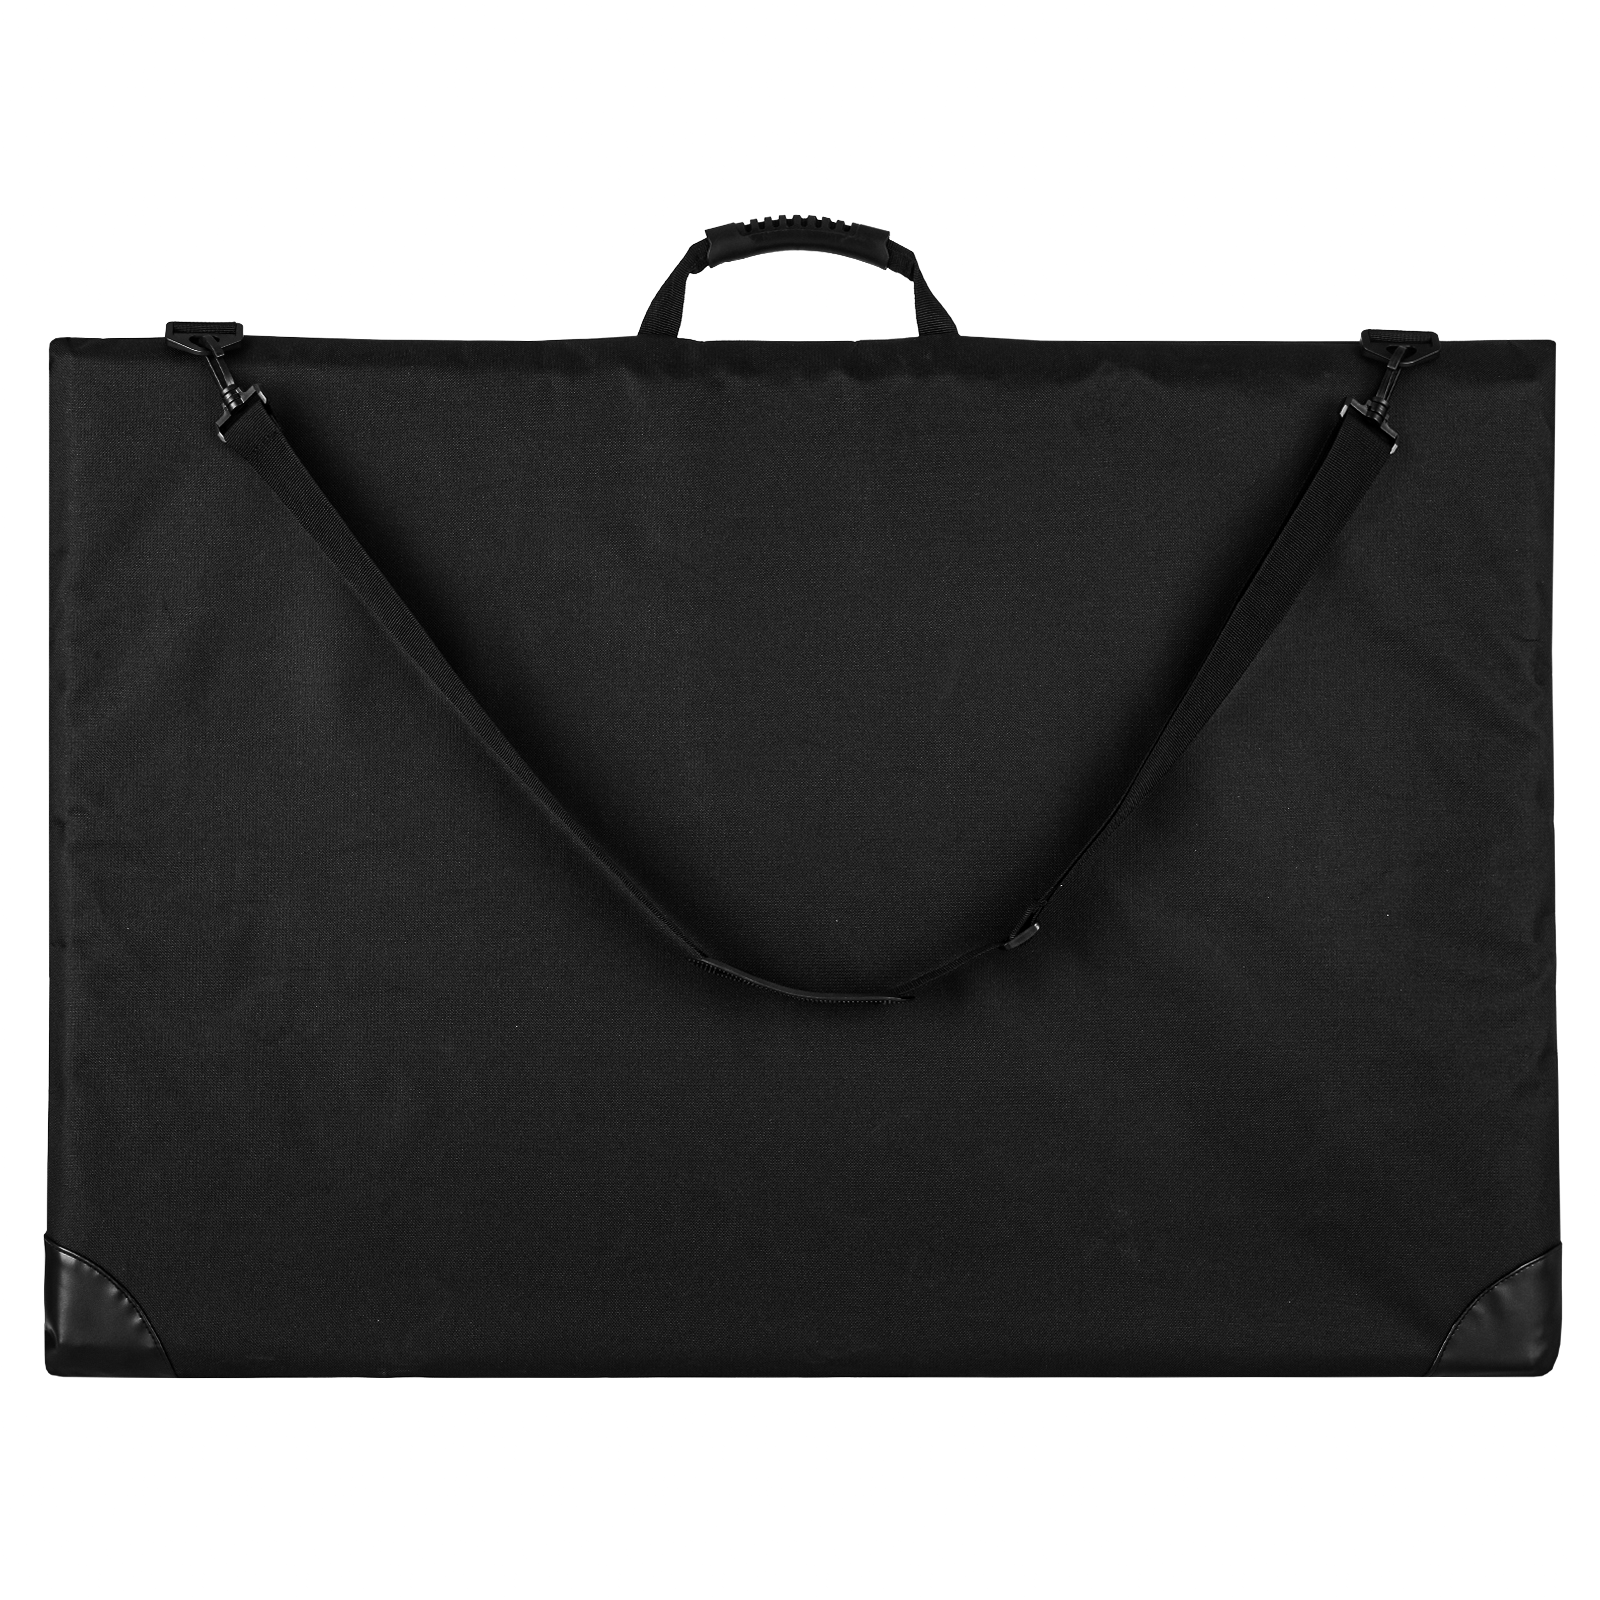 Polypropylene Black Designer Portfolio Bag at Rs 520/piece in New Delhi |  ID: 20552531748